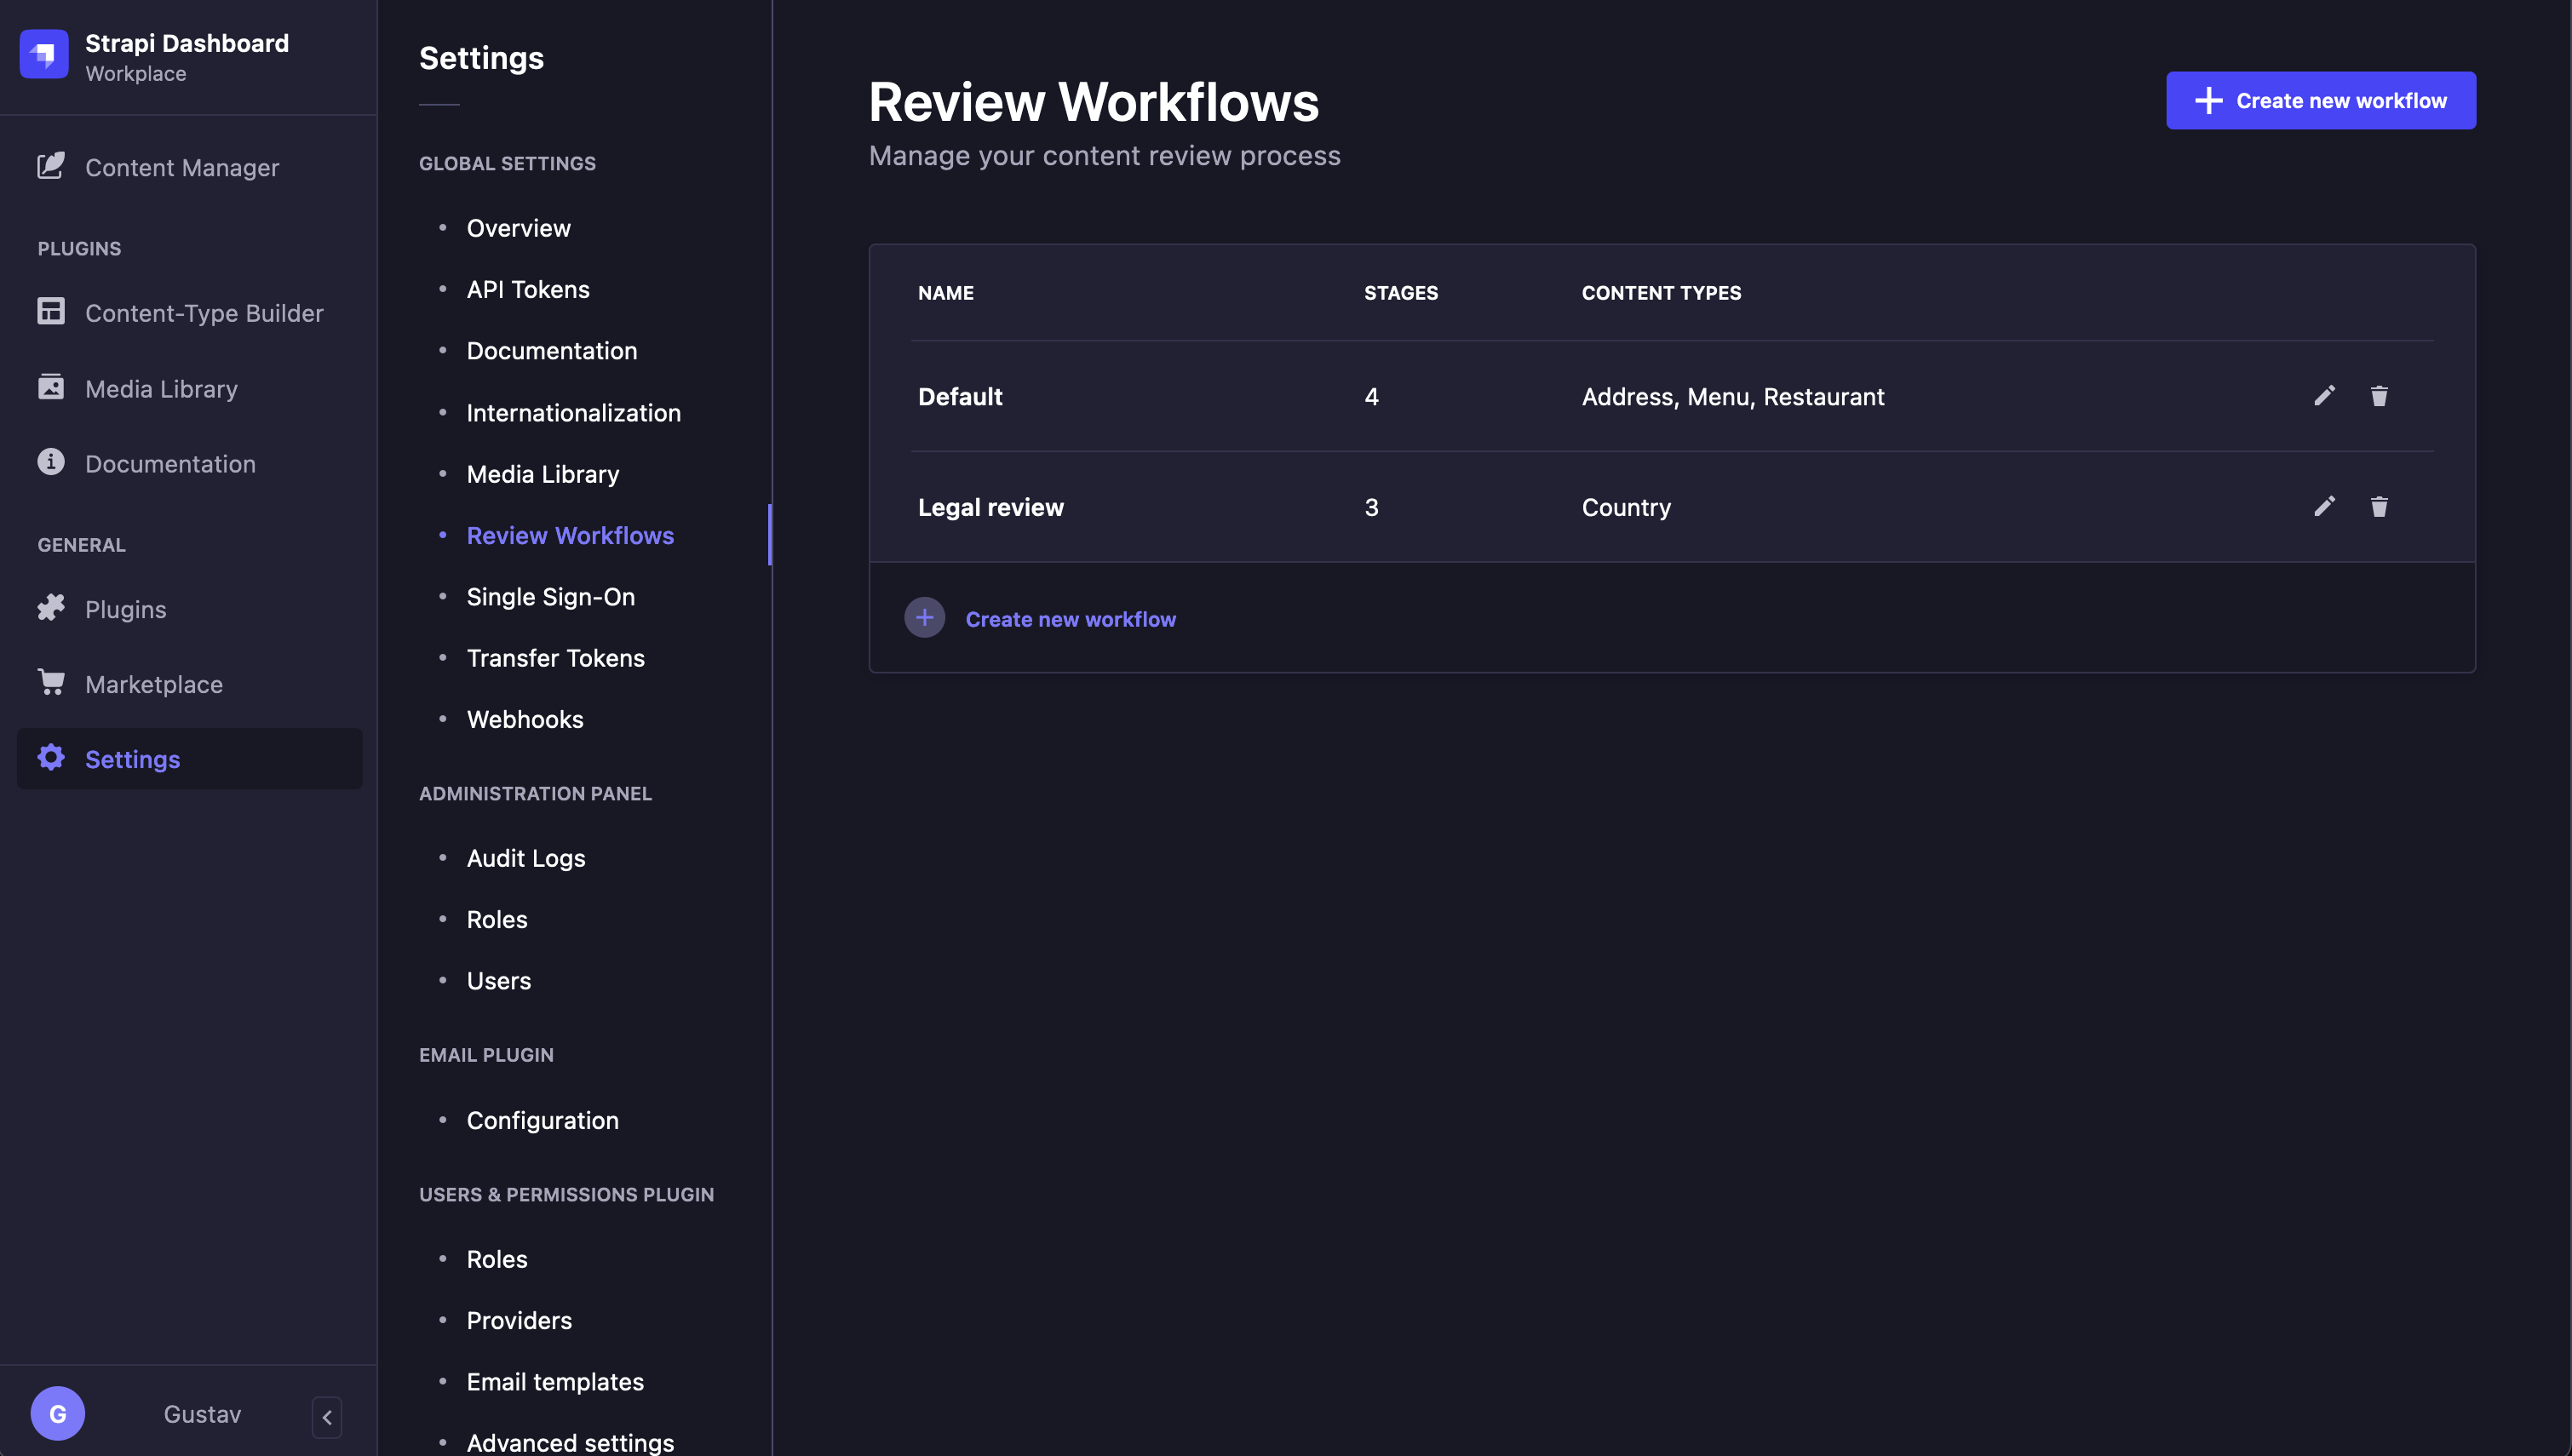 Workflow list view